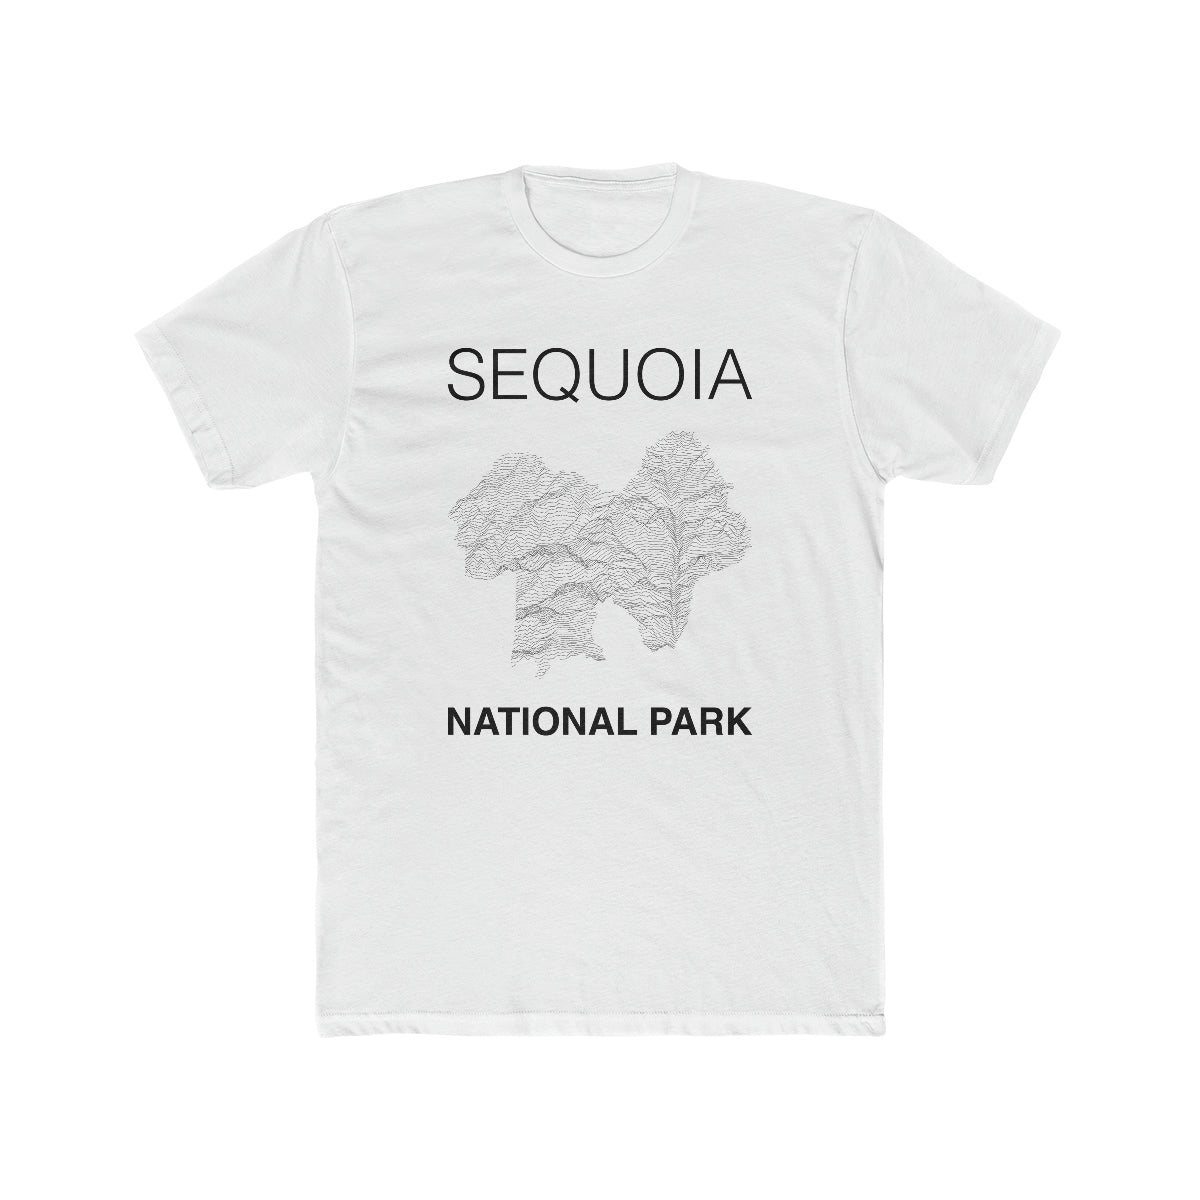 Sequoia National Park T-Shirt Lines